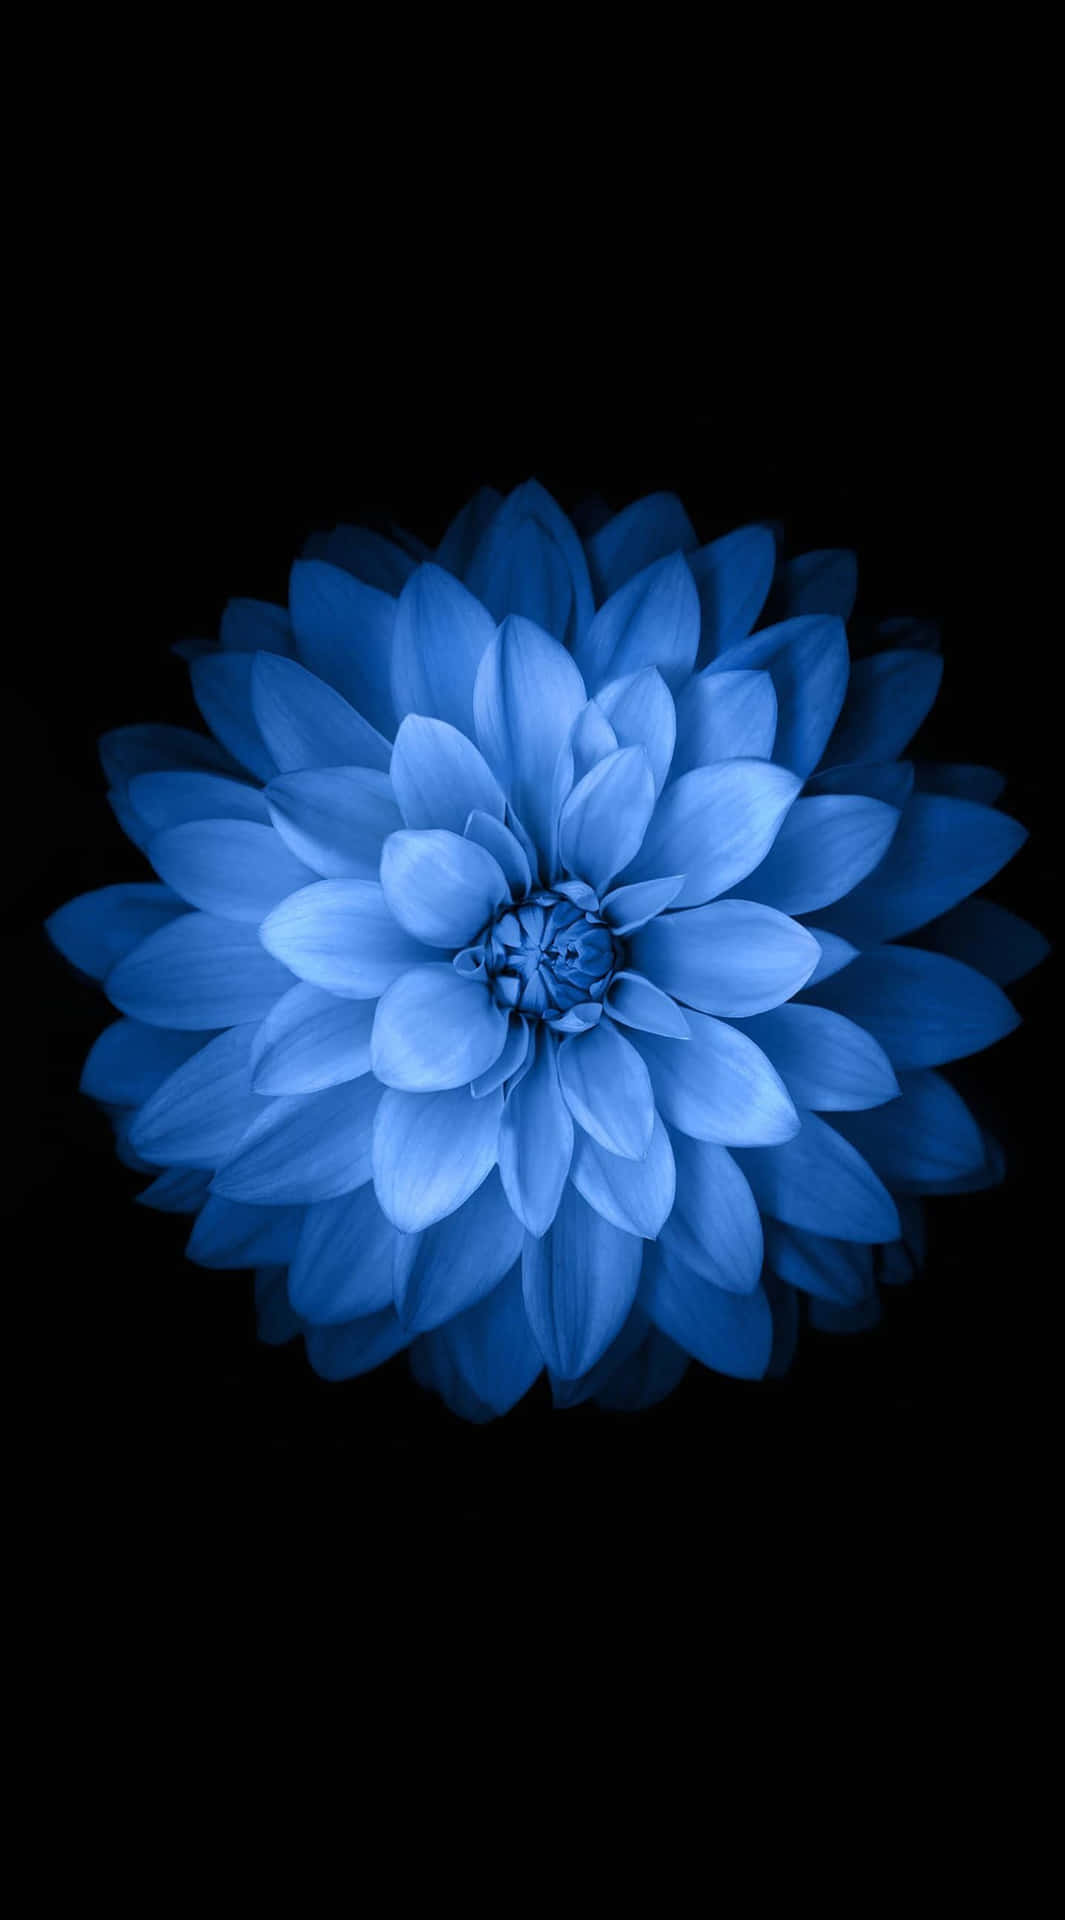 Standard Blue Flower For Iphone 6 Wallpaper